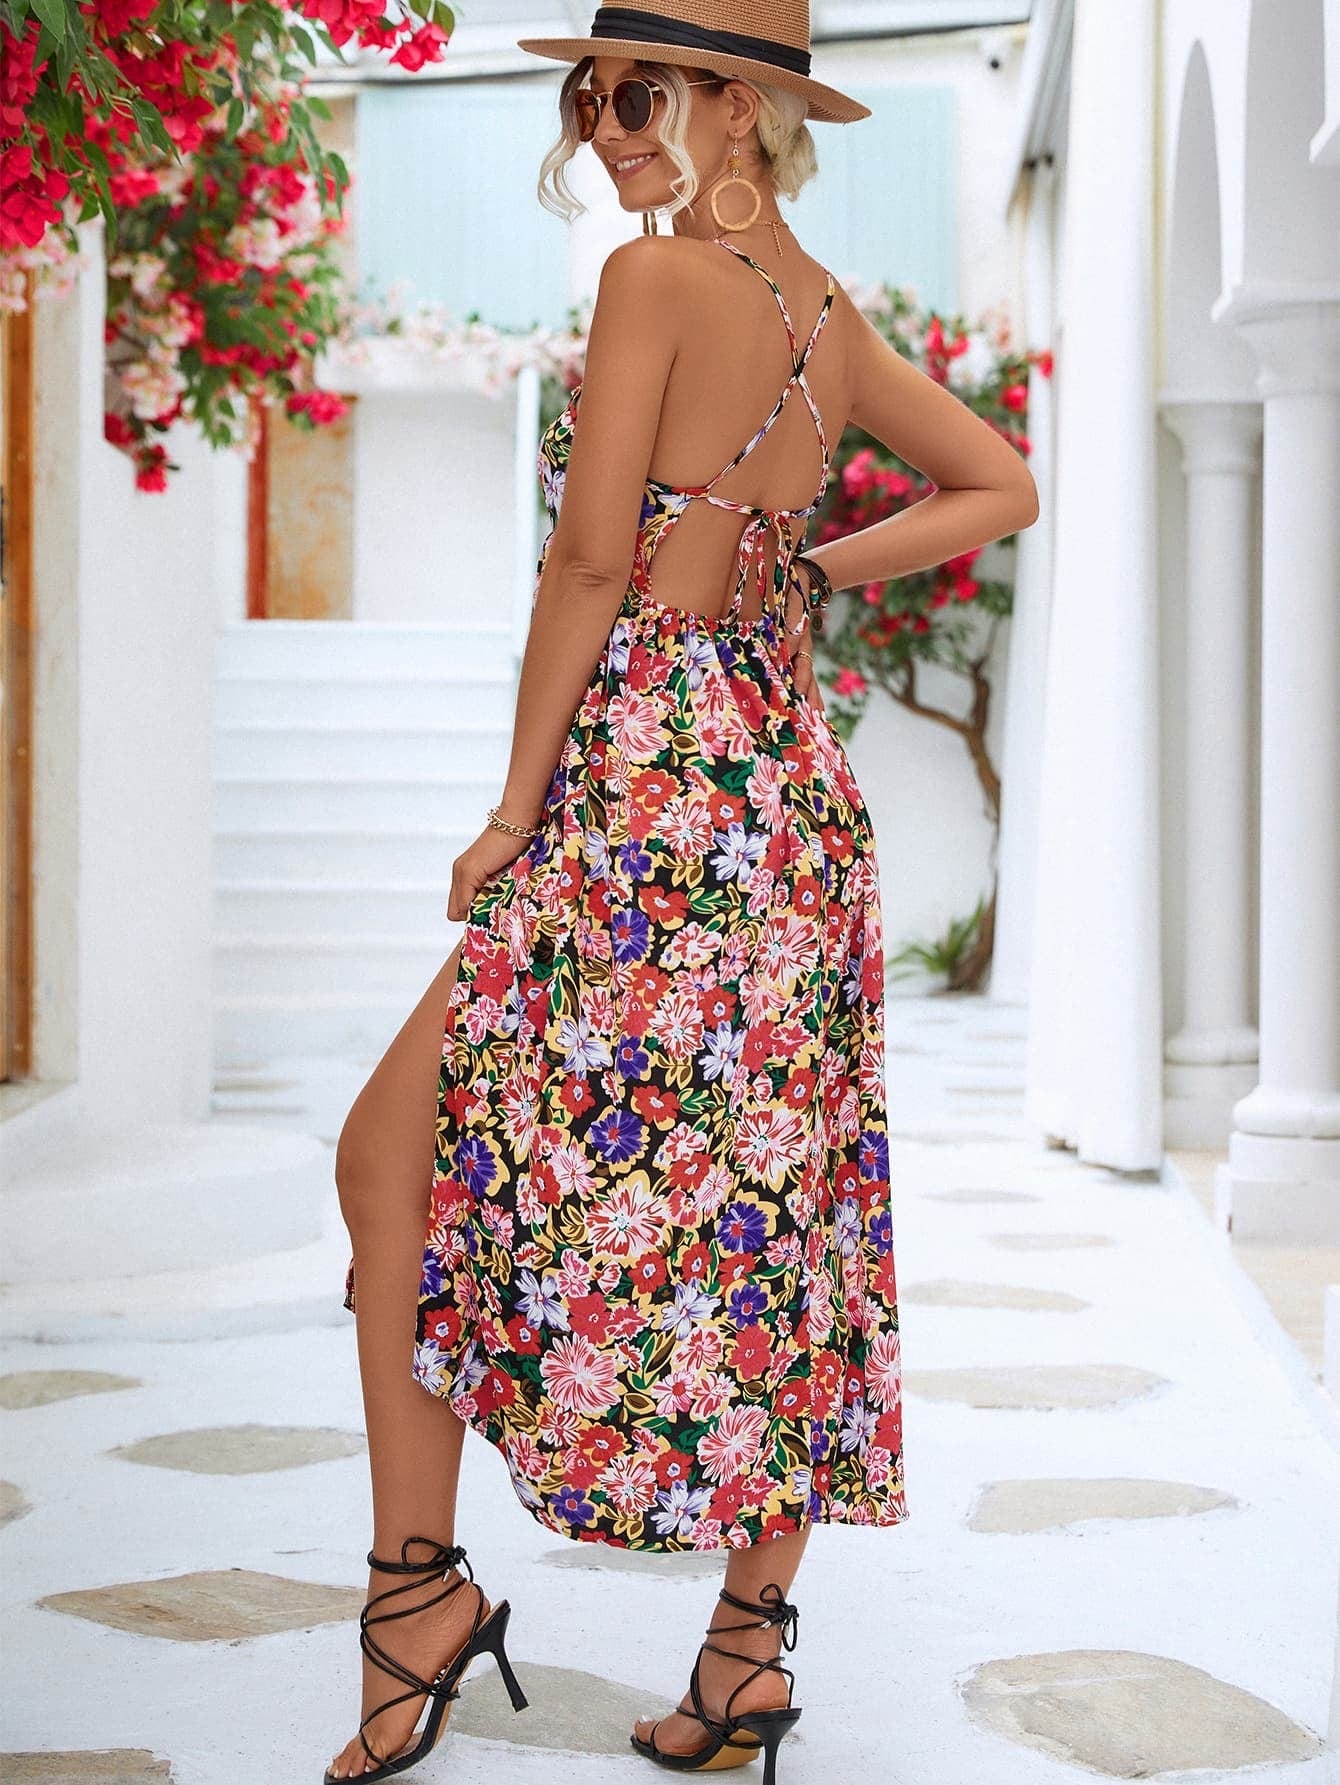 Floral Crisscross Backless Split Dress - Shop women apparel, Jewelry, bath & beauty products online - Arwen's Boutique